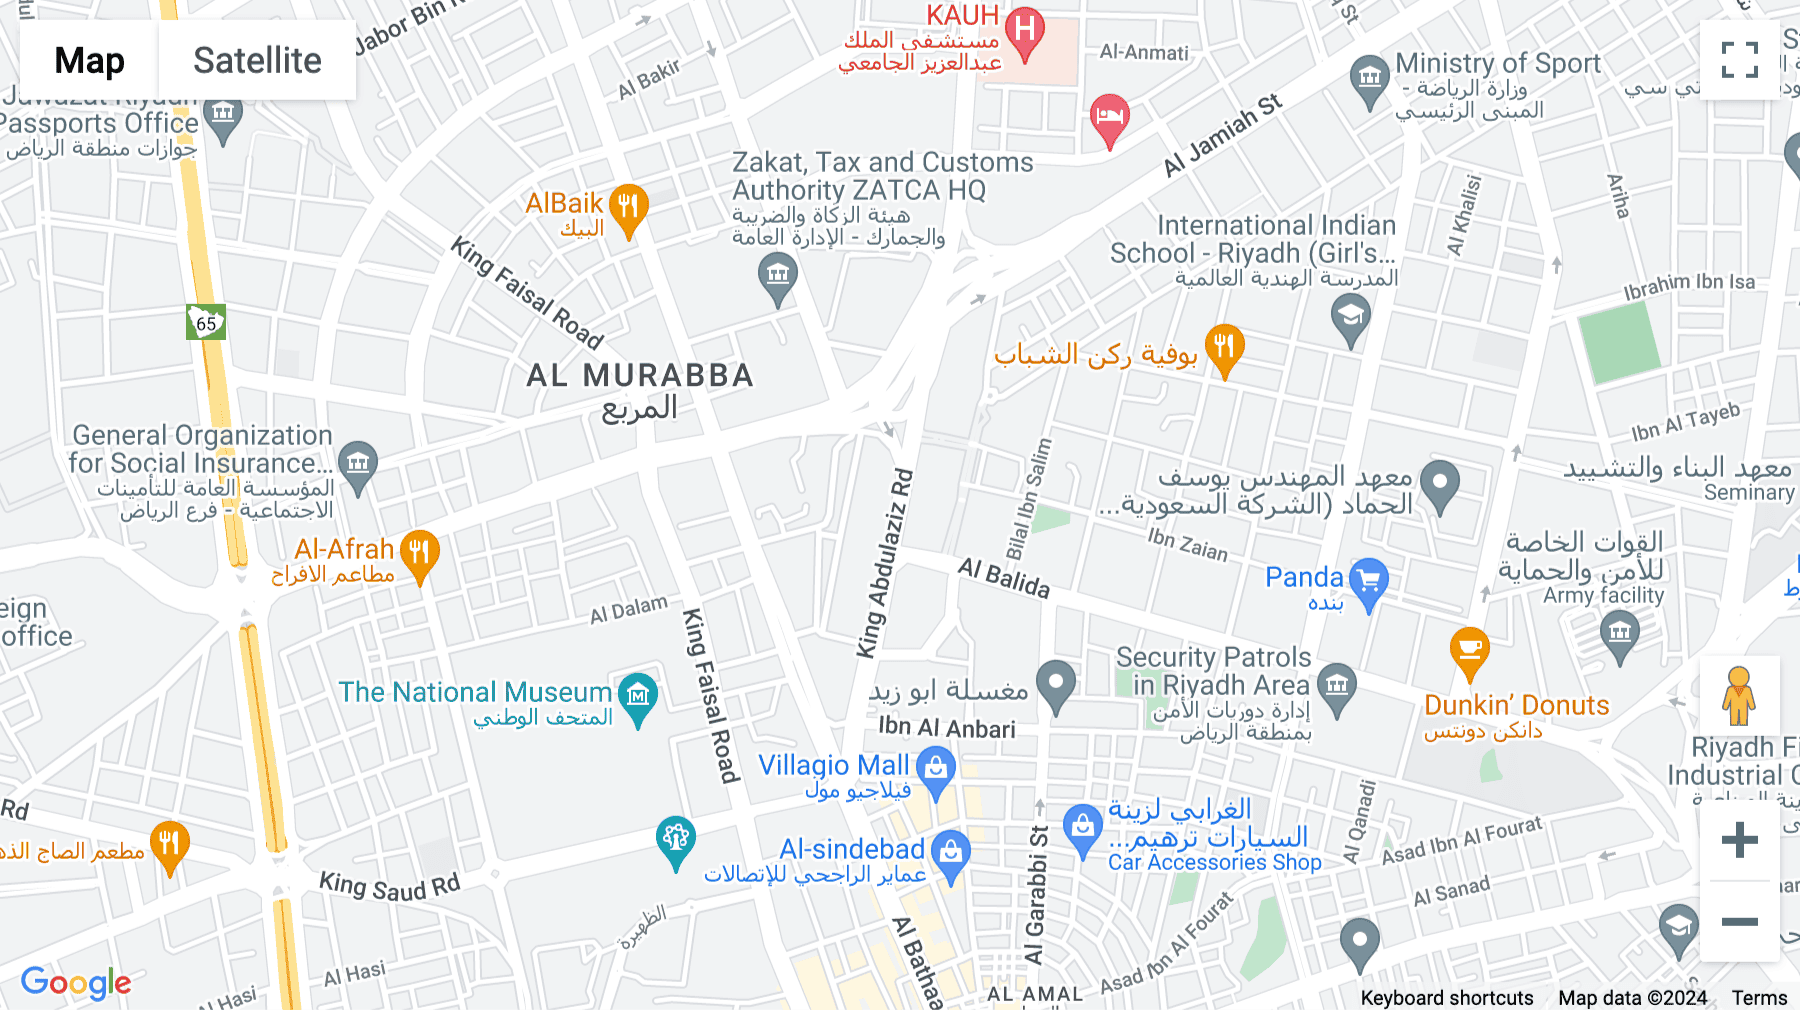 Click for interative map of King Abdul Aziz Road,,, Riyadh